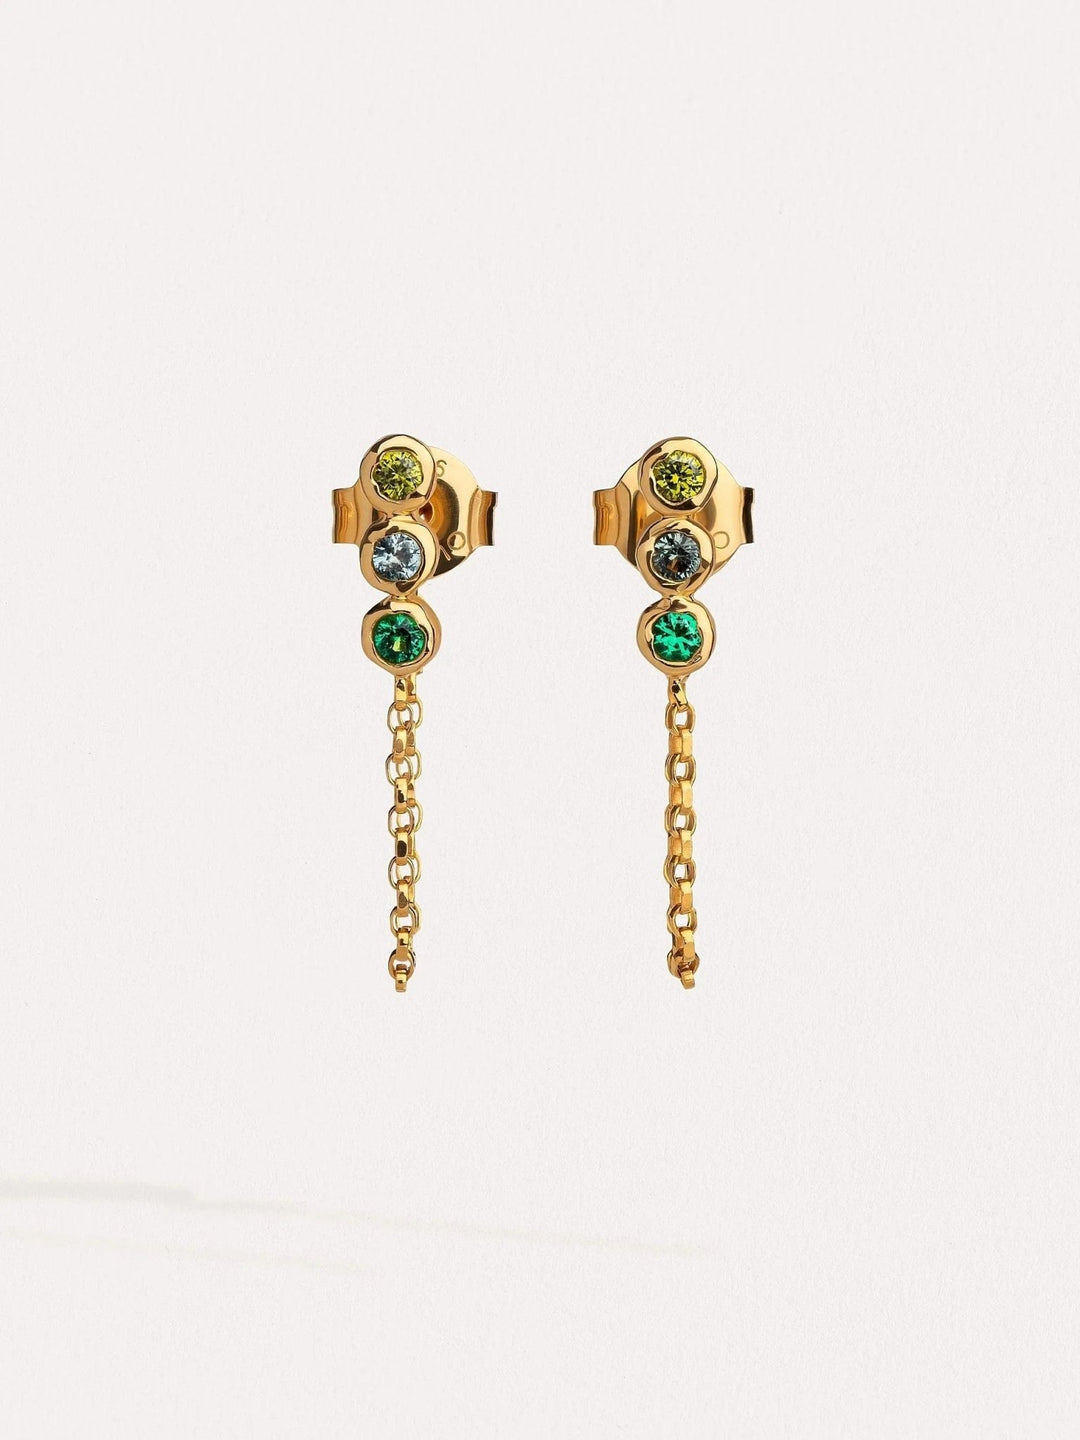 Kate Colorful Gemstone Earrings with Peridot, Emerald, Rhodolite, Ruby - GREENSAnniversary Giftchain earringsLunai Jewelry